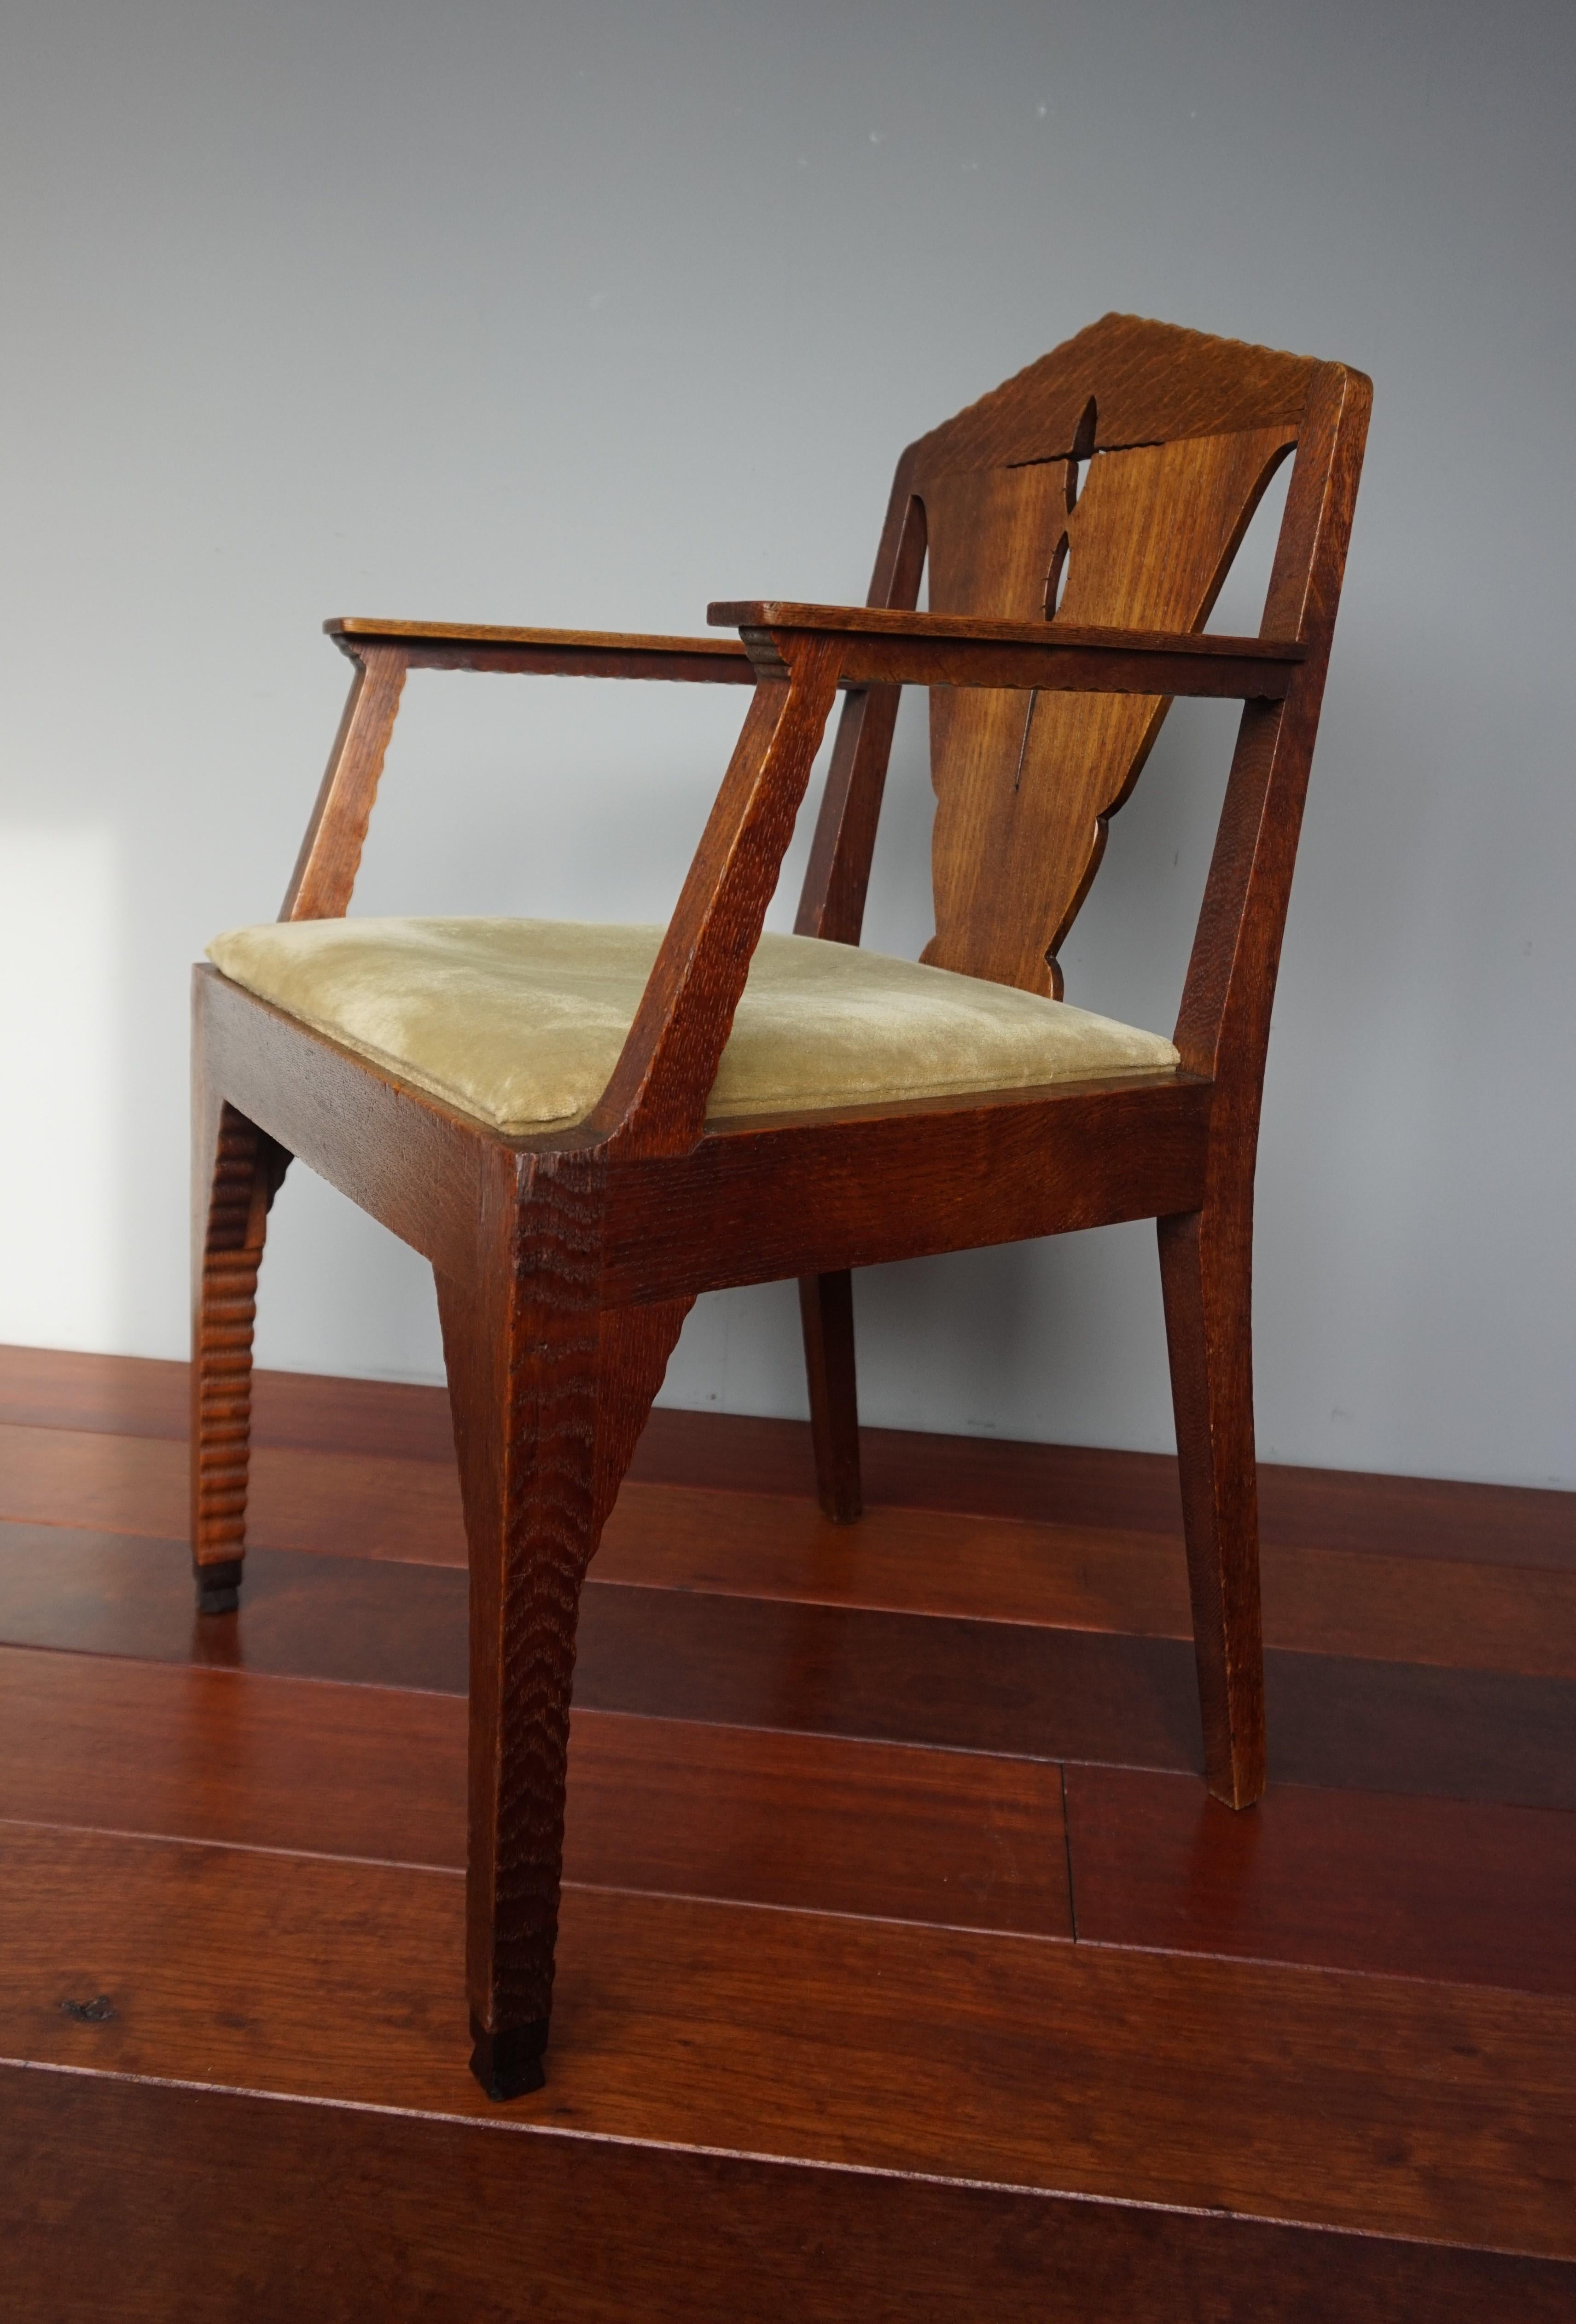 Brilliant Design Dutch Arts & Crafts Oak Desk Chair w. Original Upholstery 1910s For Sale 10